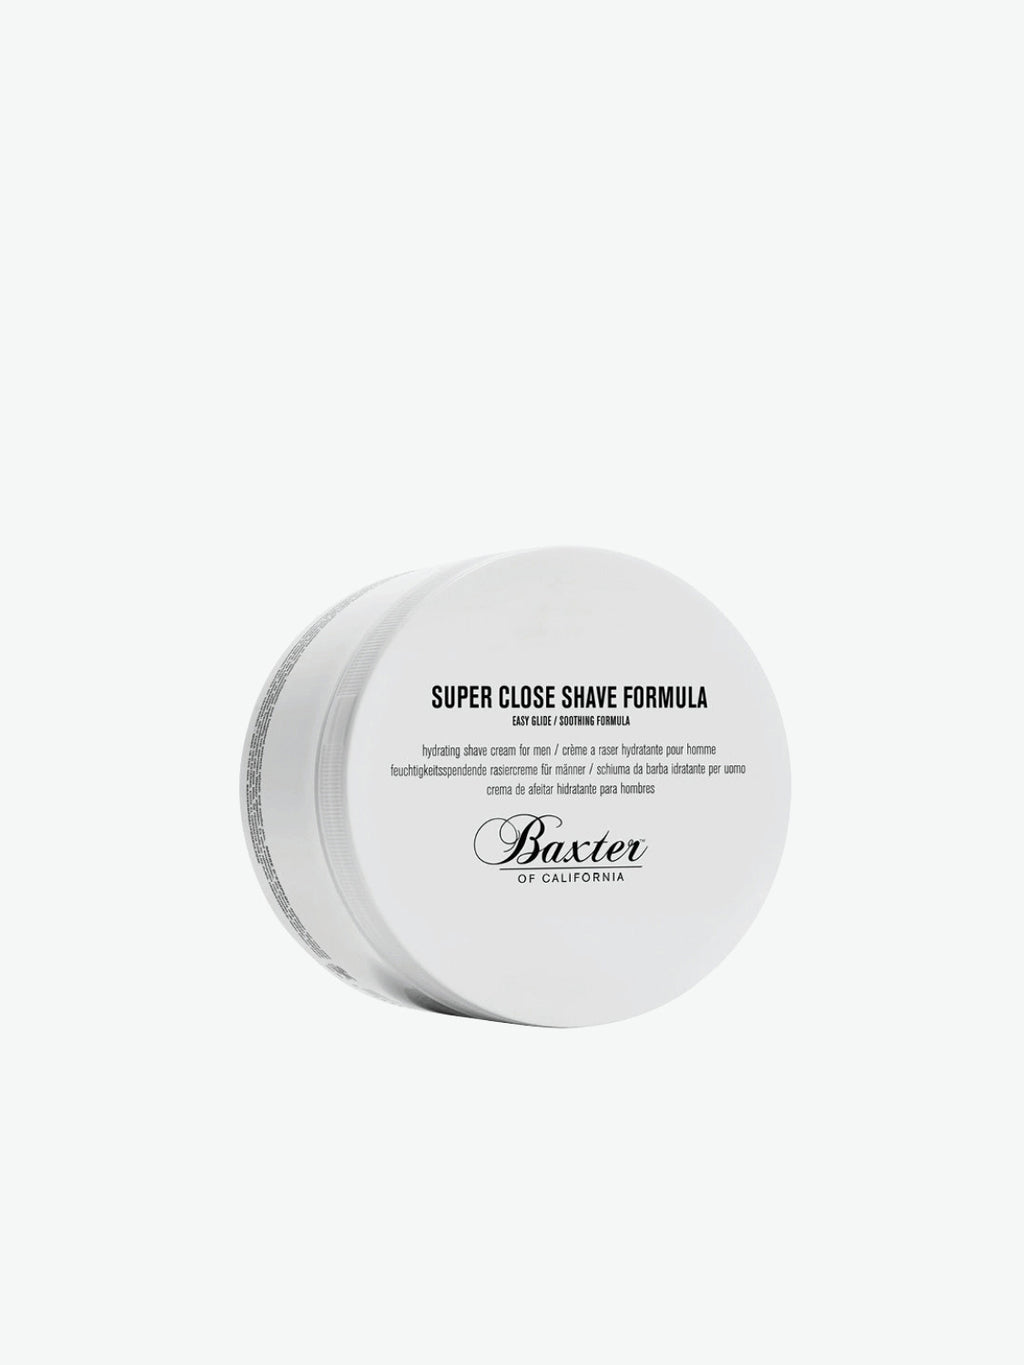 Baxter of California Shaving Cream Super Close Shave Formula | A